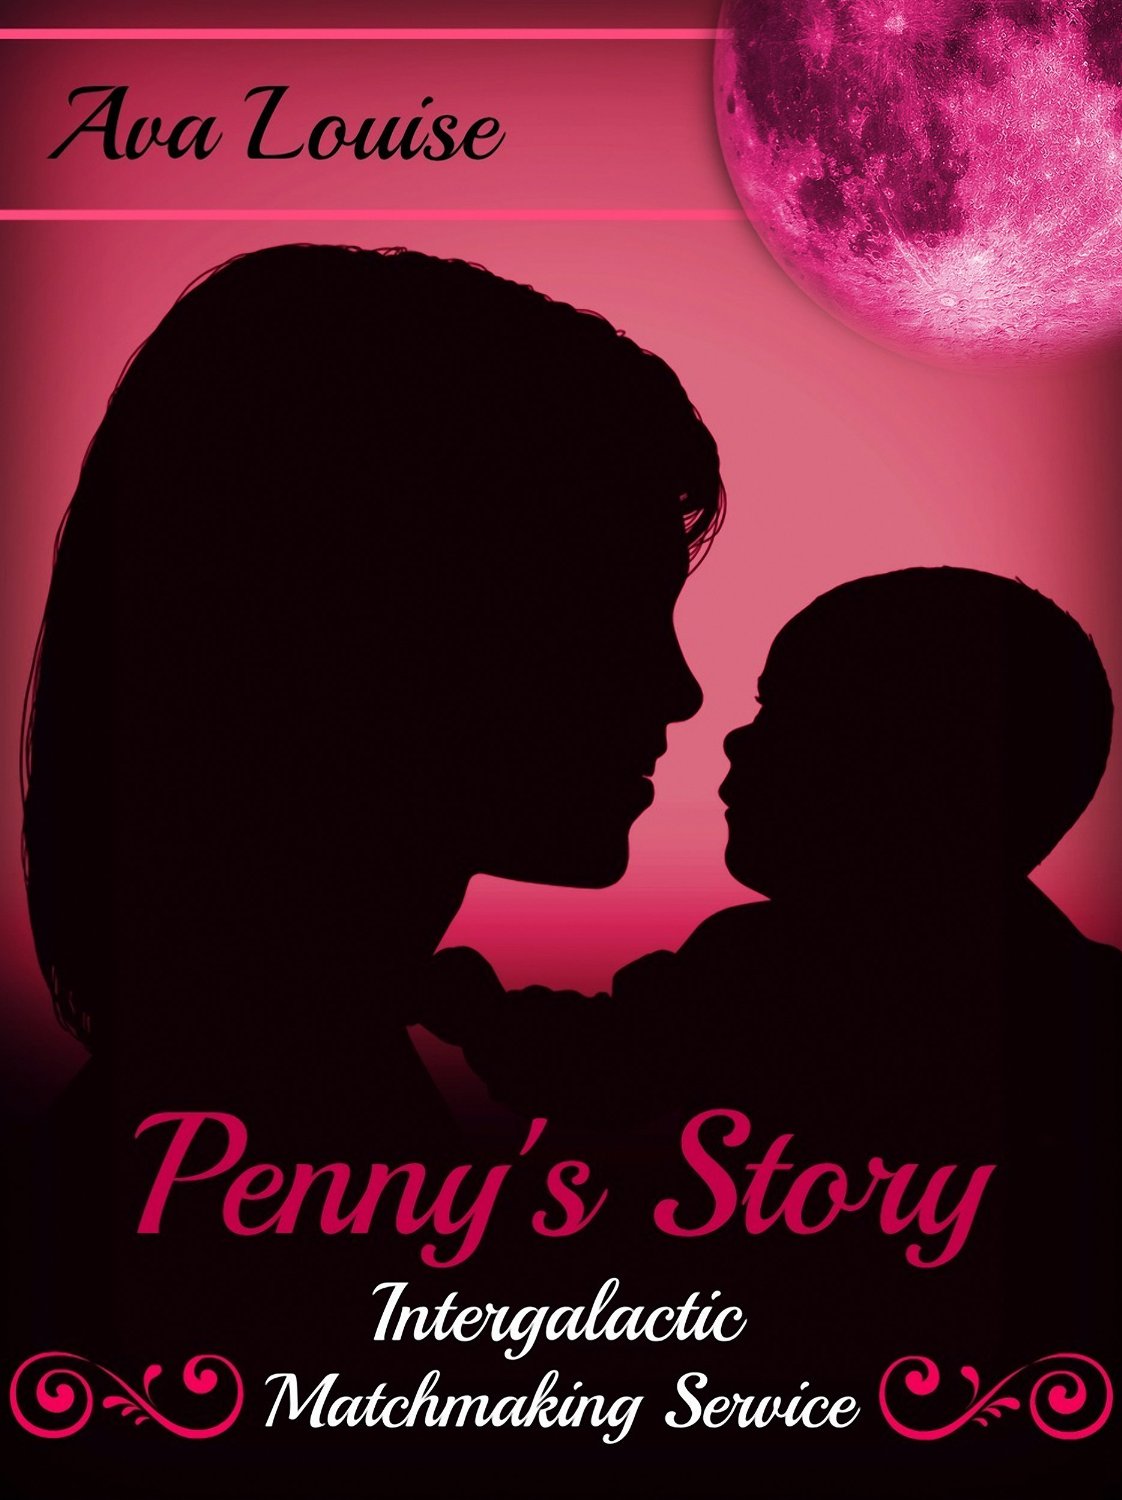 Pennys Story